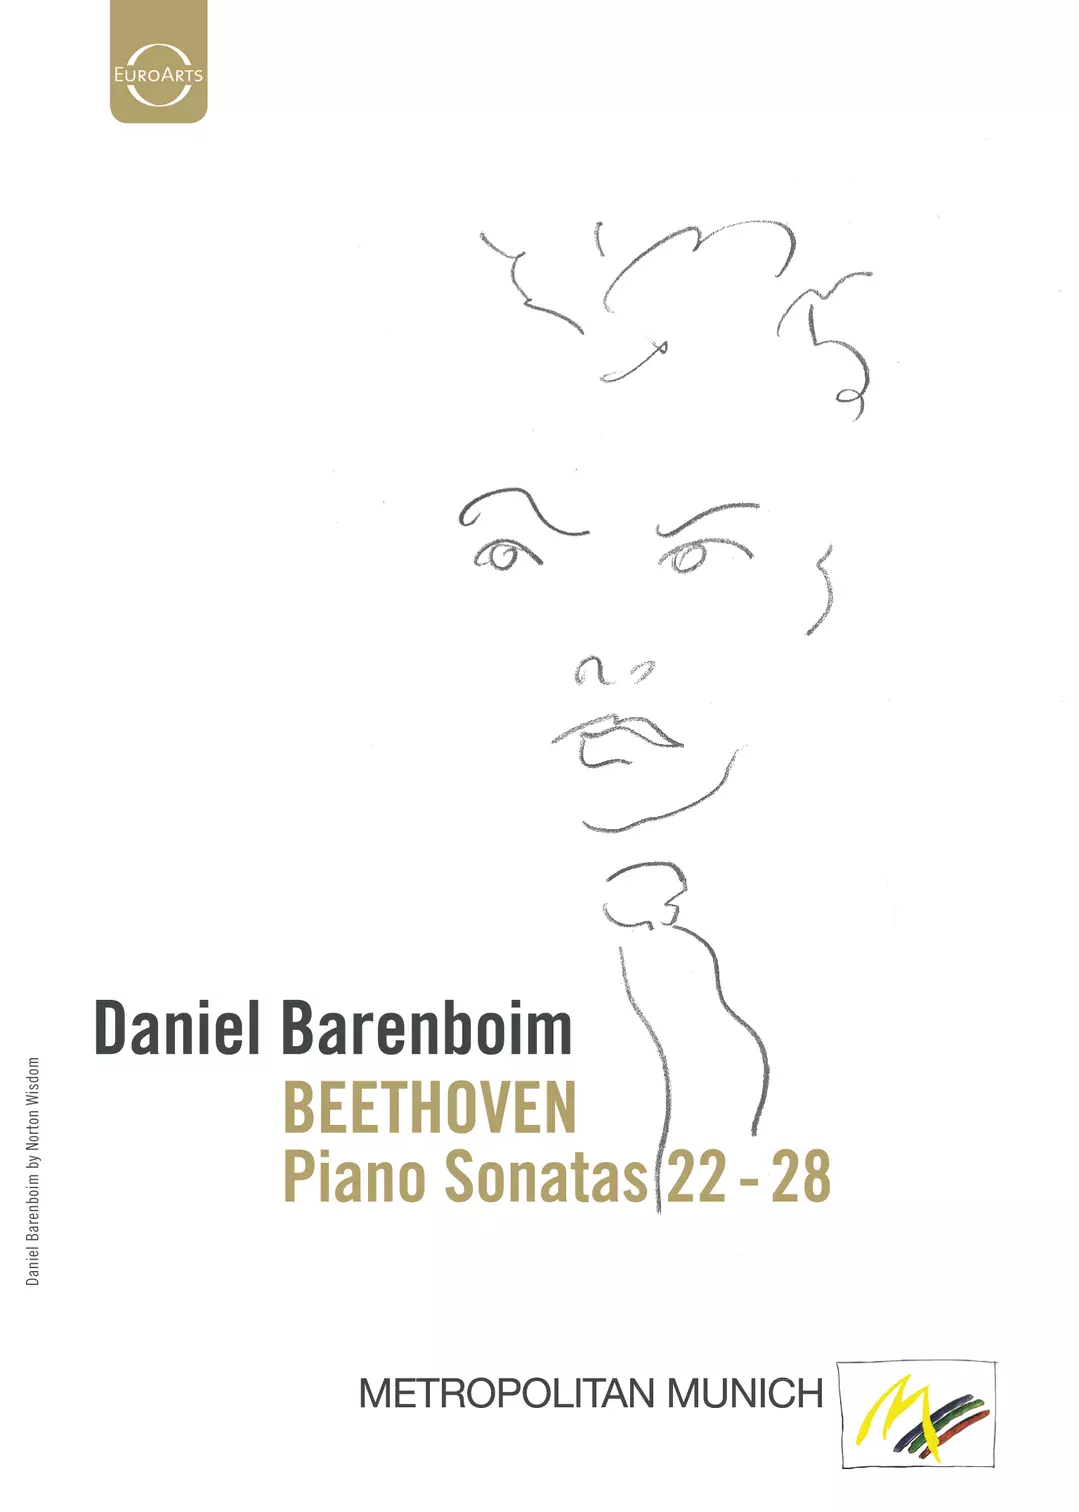 Barenboim plays Beethoven Piano Sonatas Nos. 22-28, Part 4/5